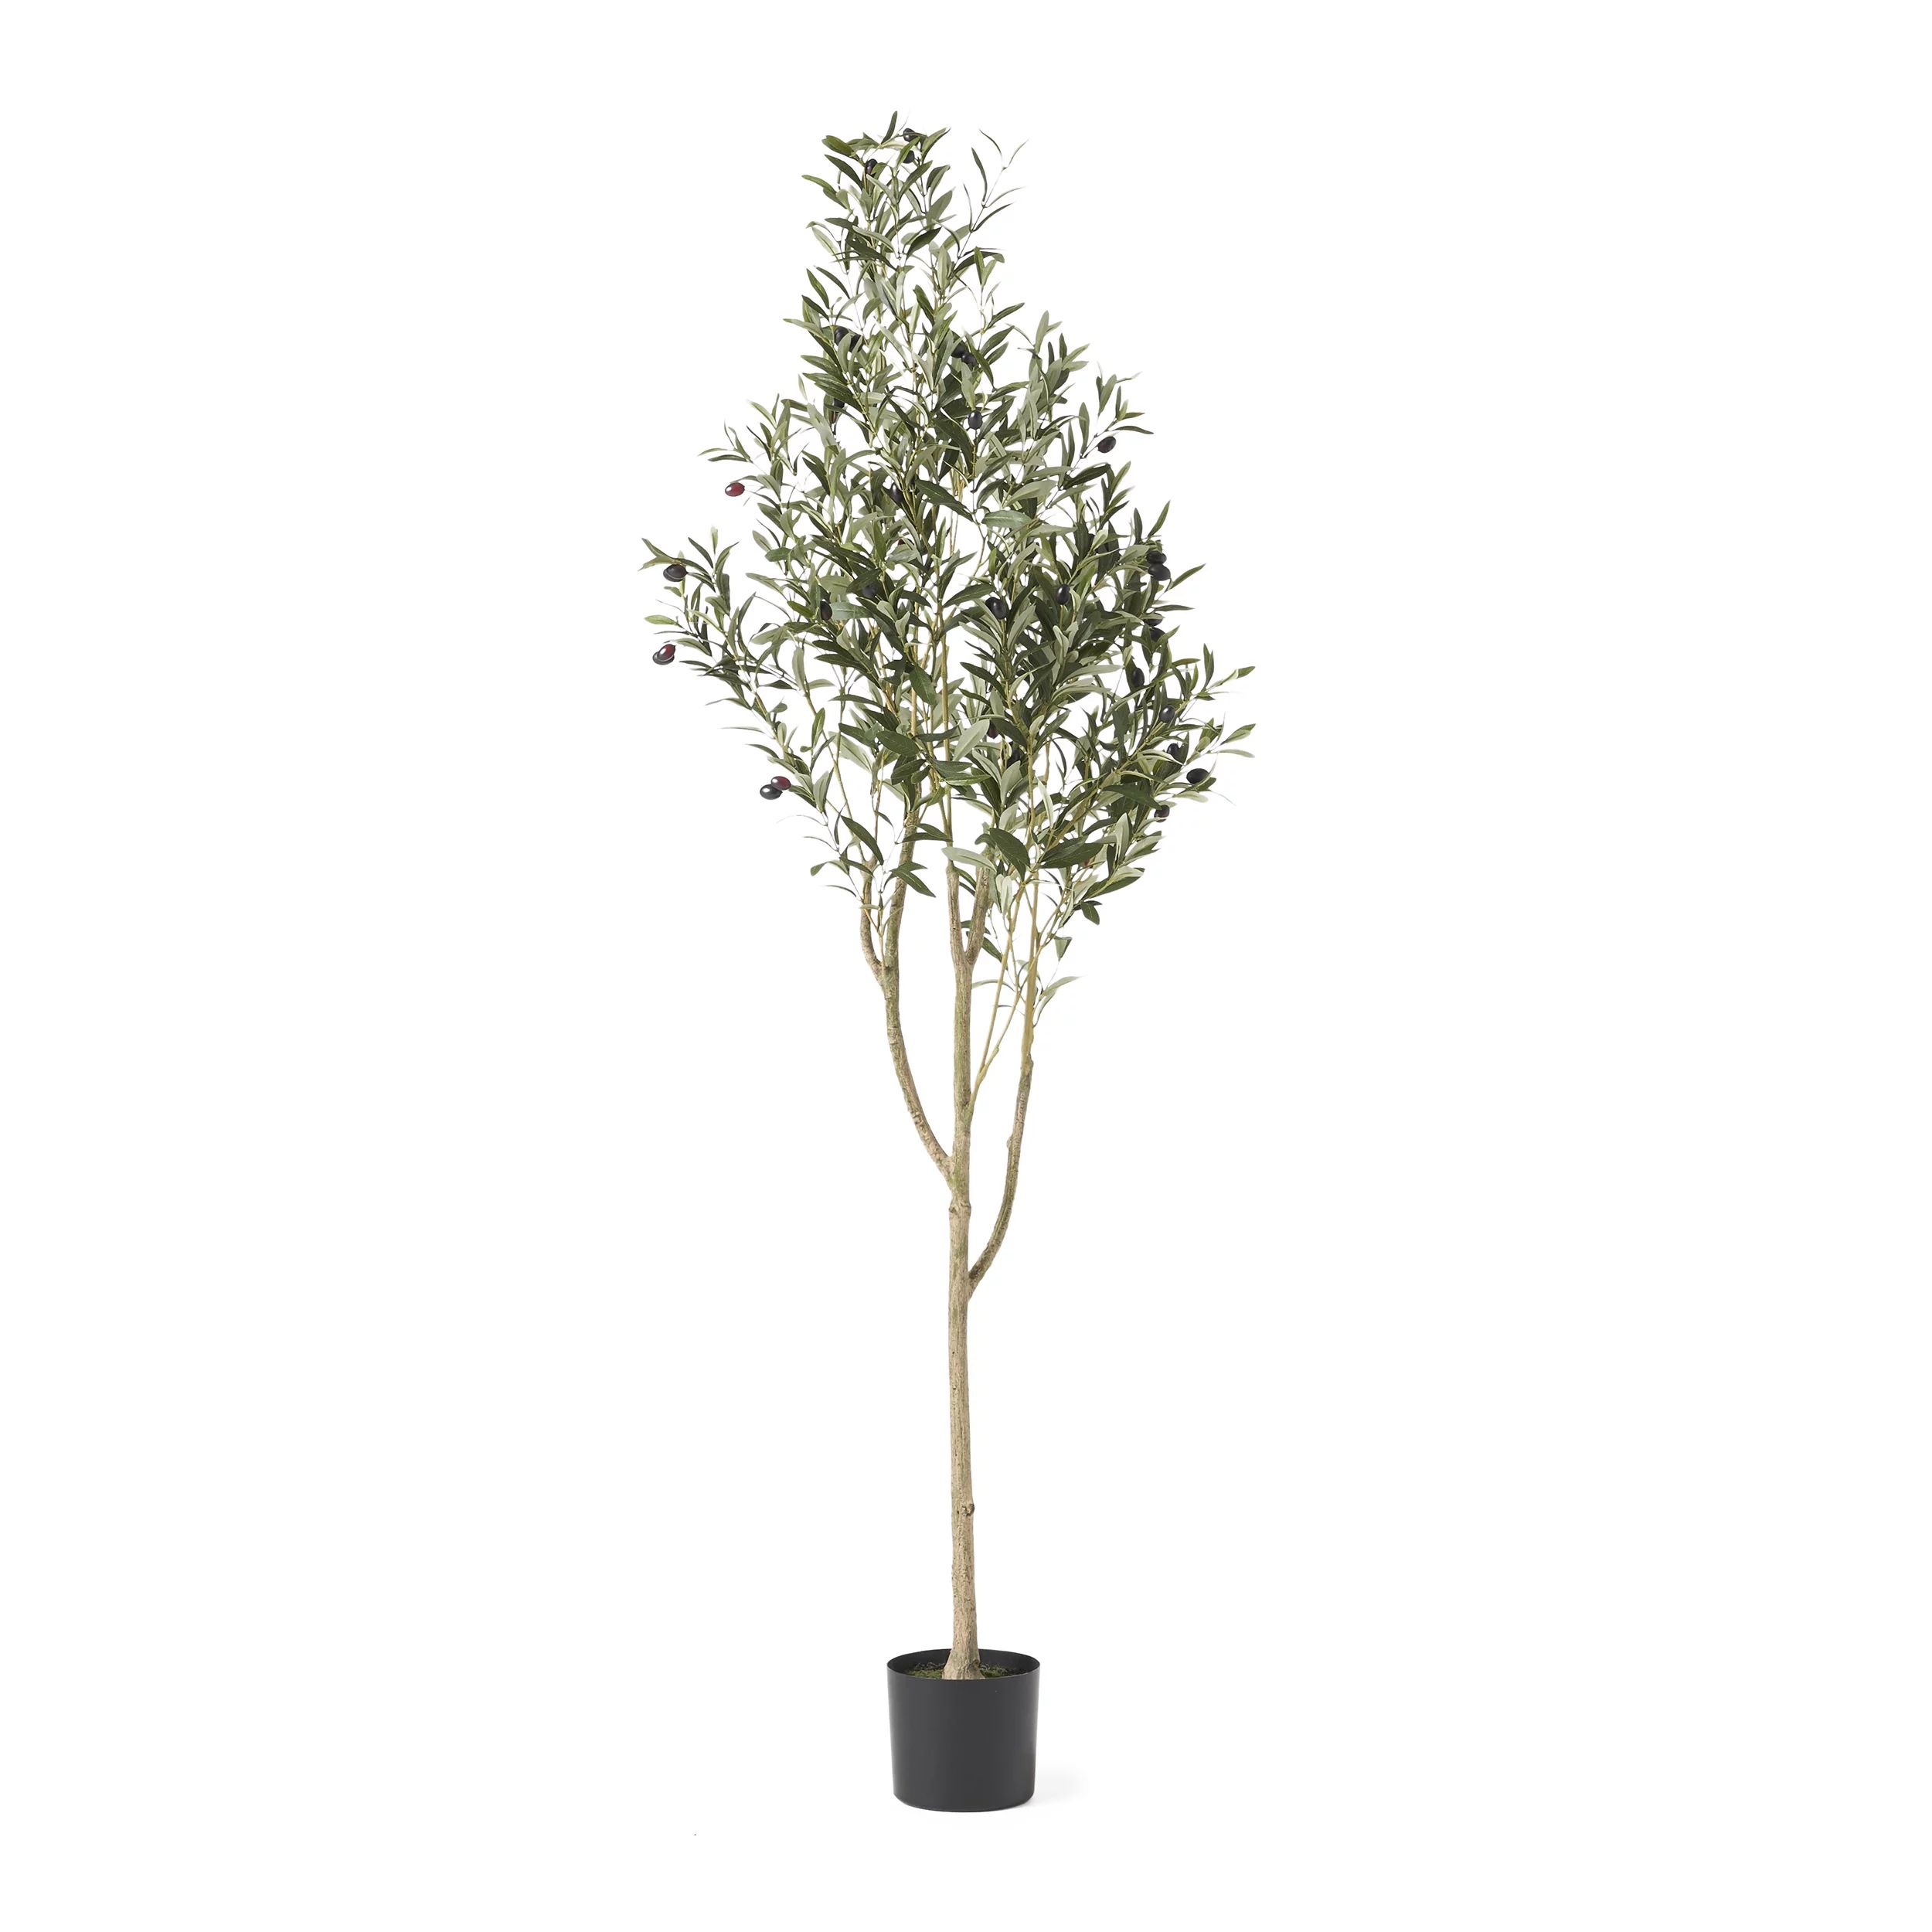 Atoka 6' x 2' Artificial Olive Tree, Green | Walmart (US)